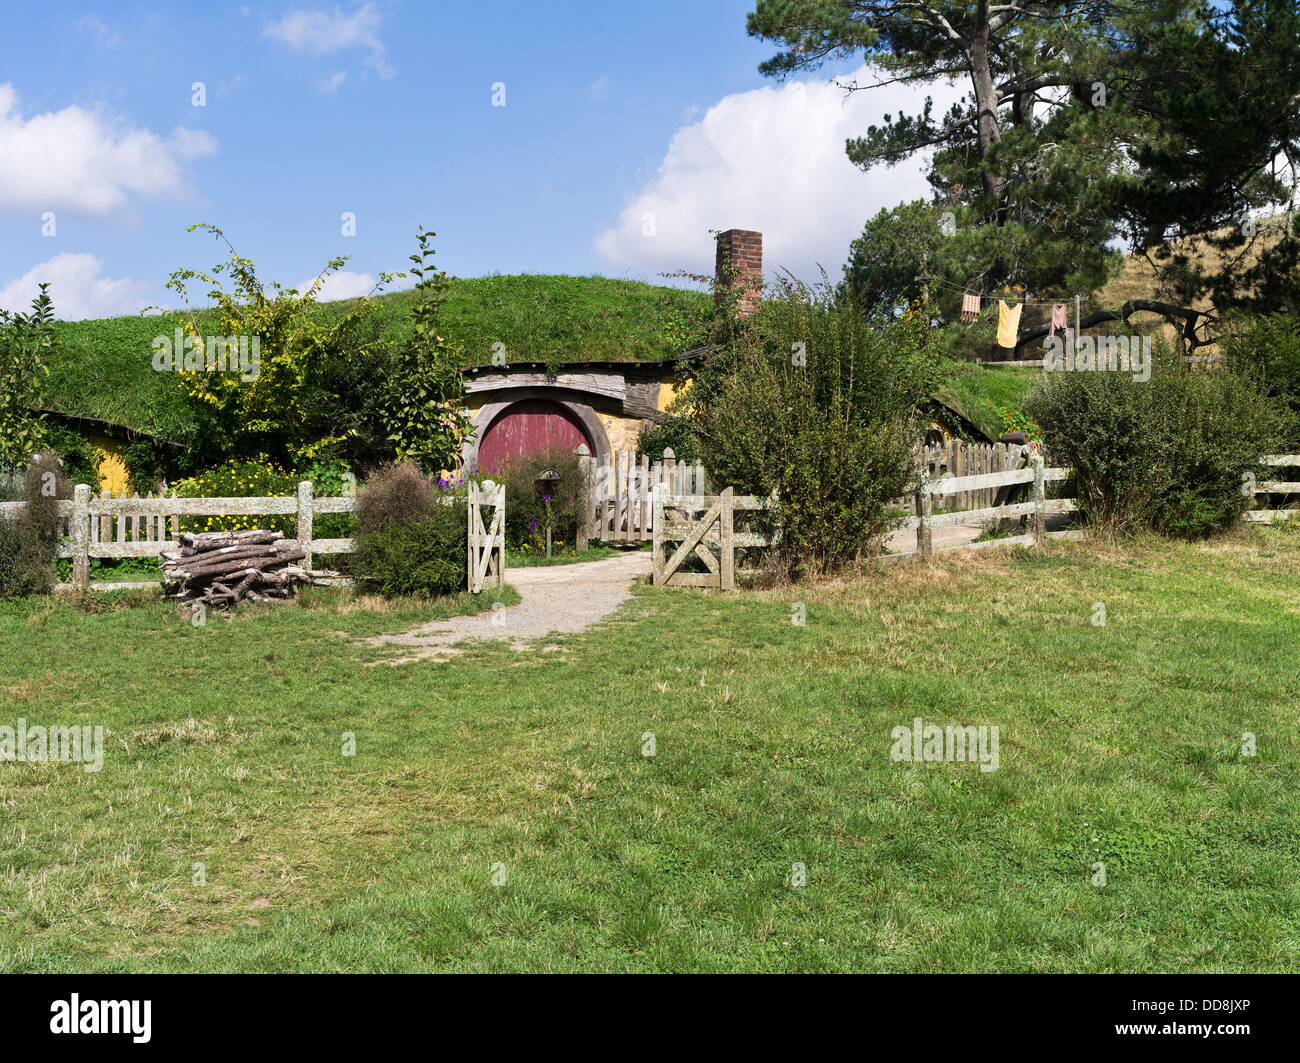 dh Herr der Ringe HOBBINGEN Neuseeland Hobbits Cottage Garten Film set Film Website Filme Mittelerde Hobbit Haus Stockfoto